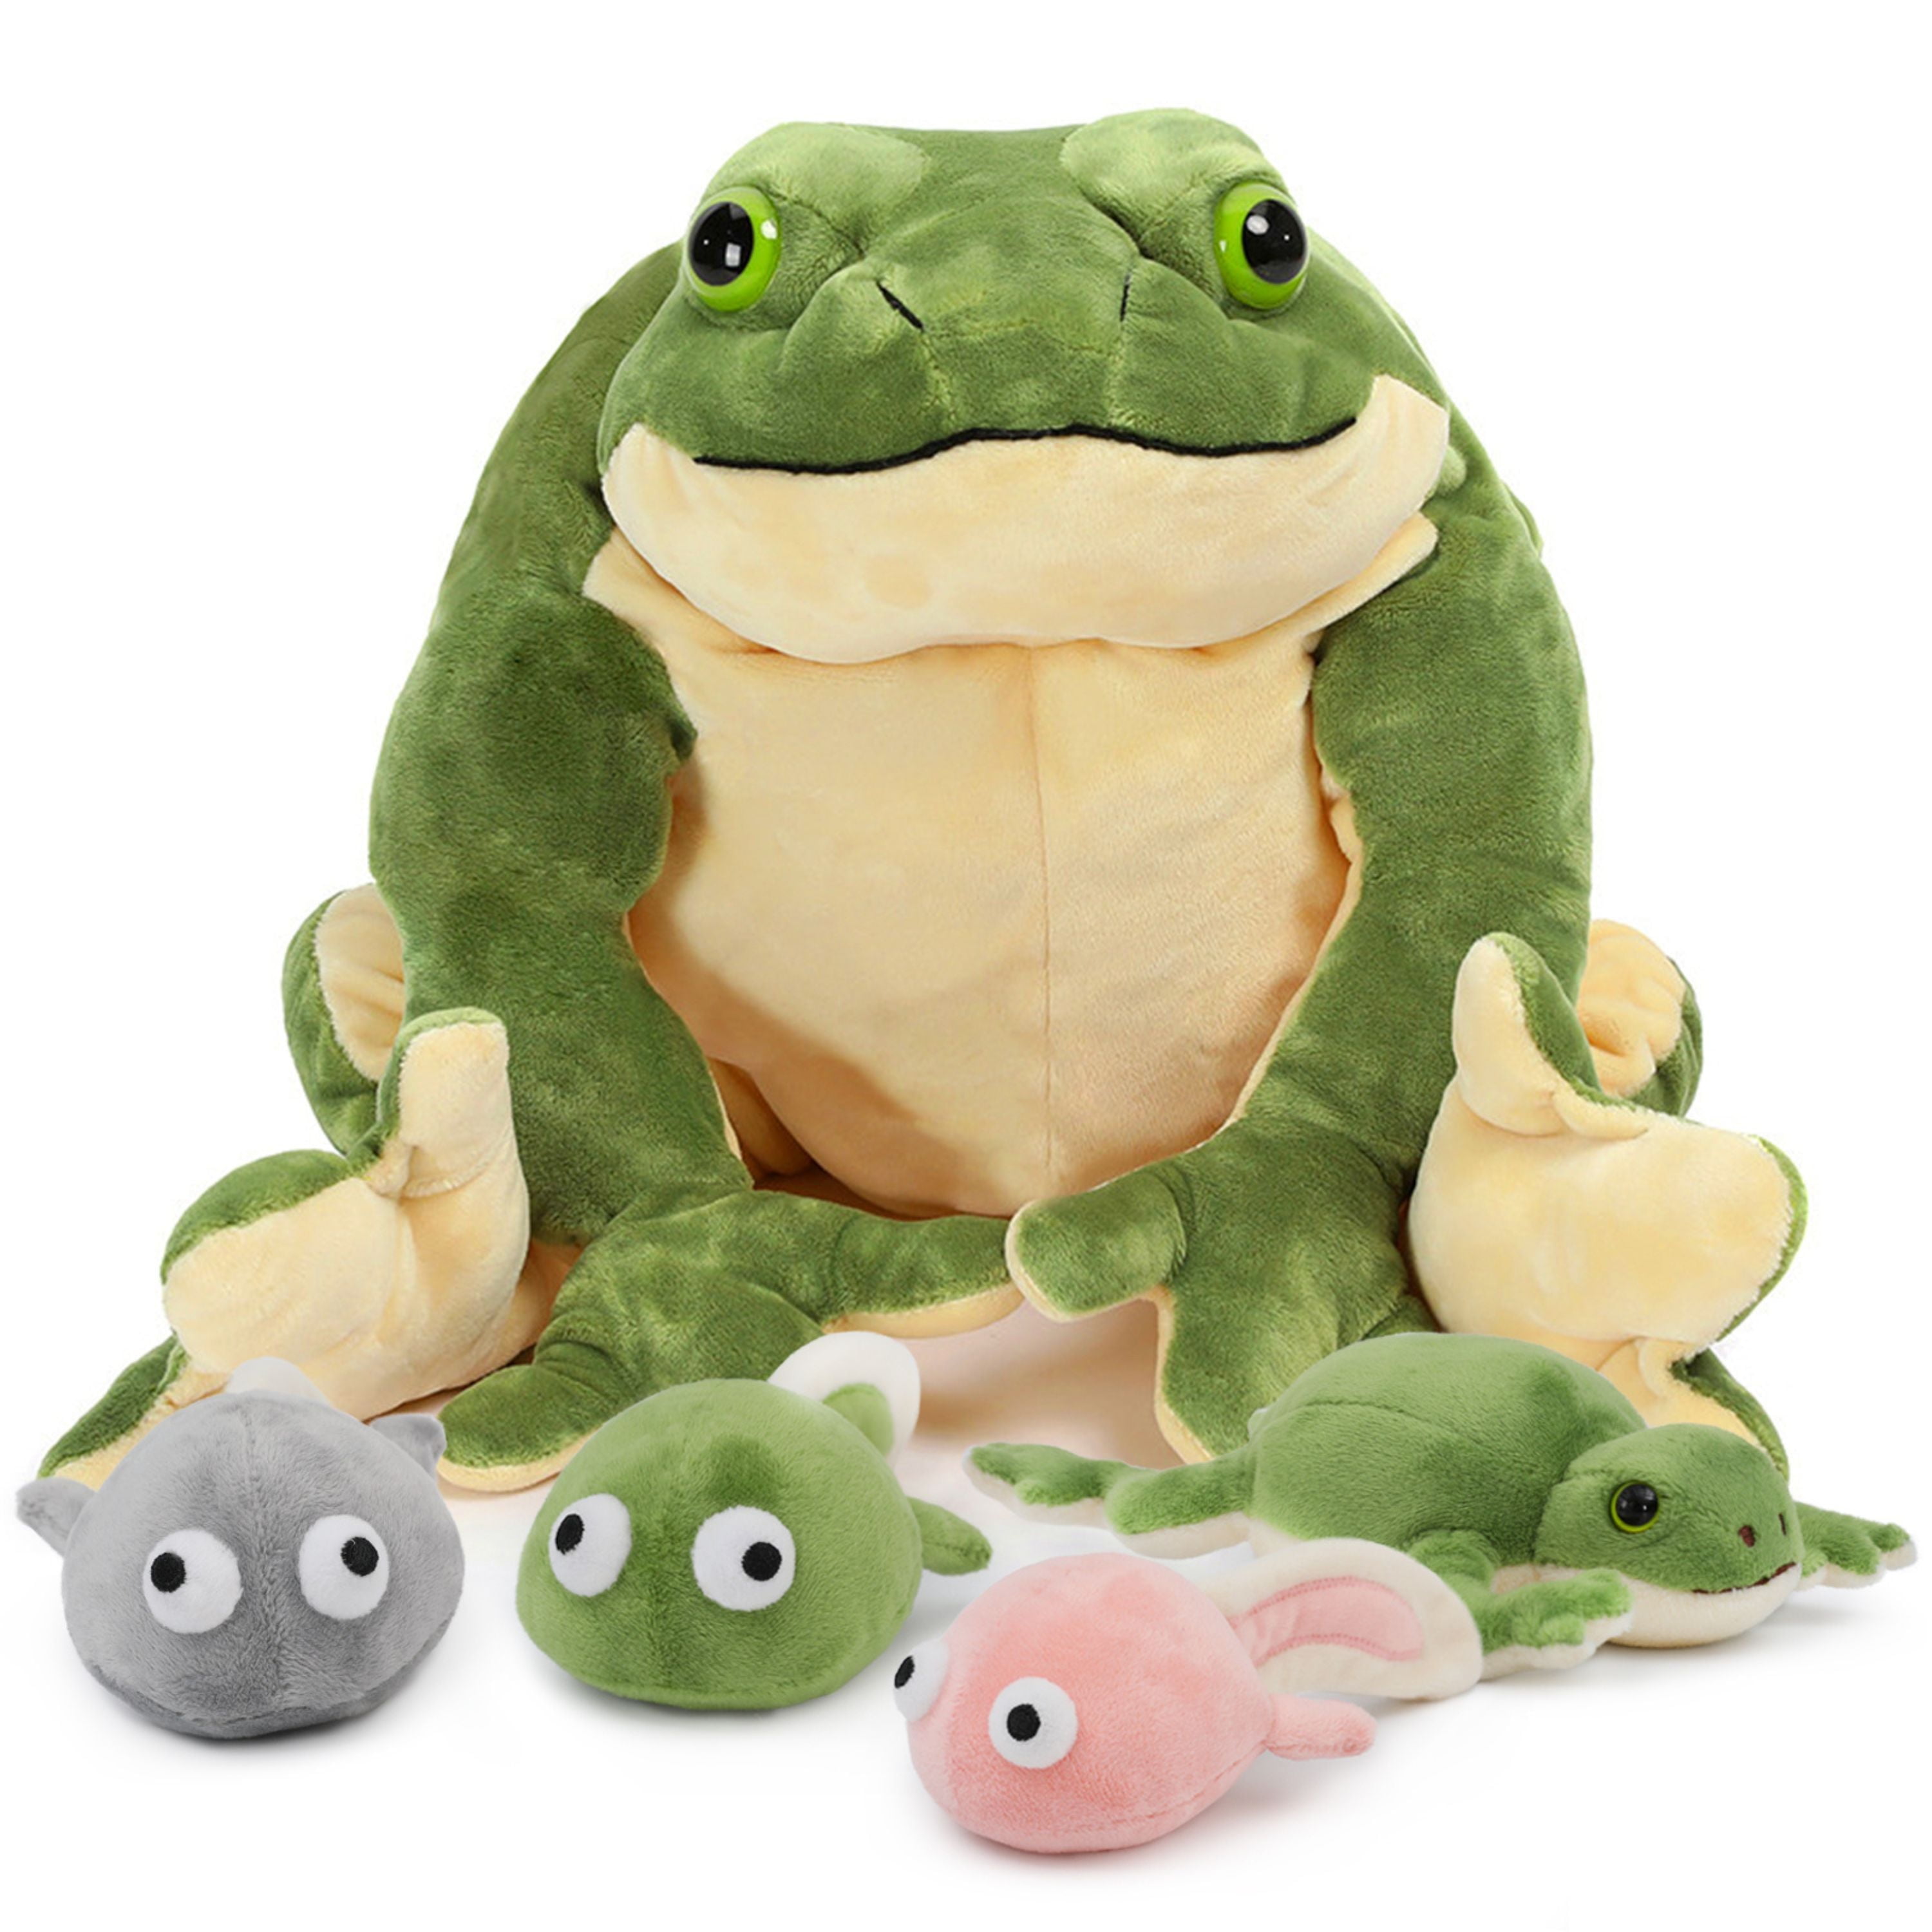 MaoGoLan 22 Giant Frog Stuffed Animal with 4 Babies Plush Toy